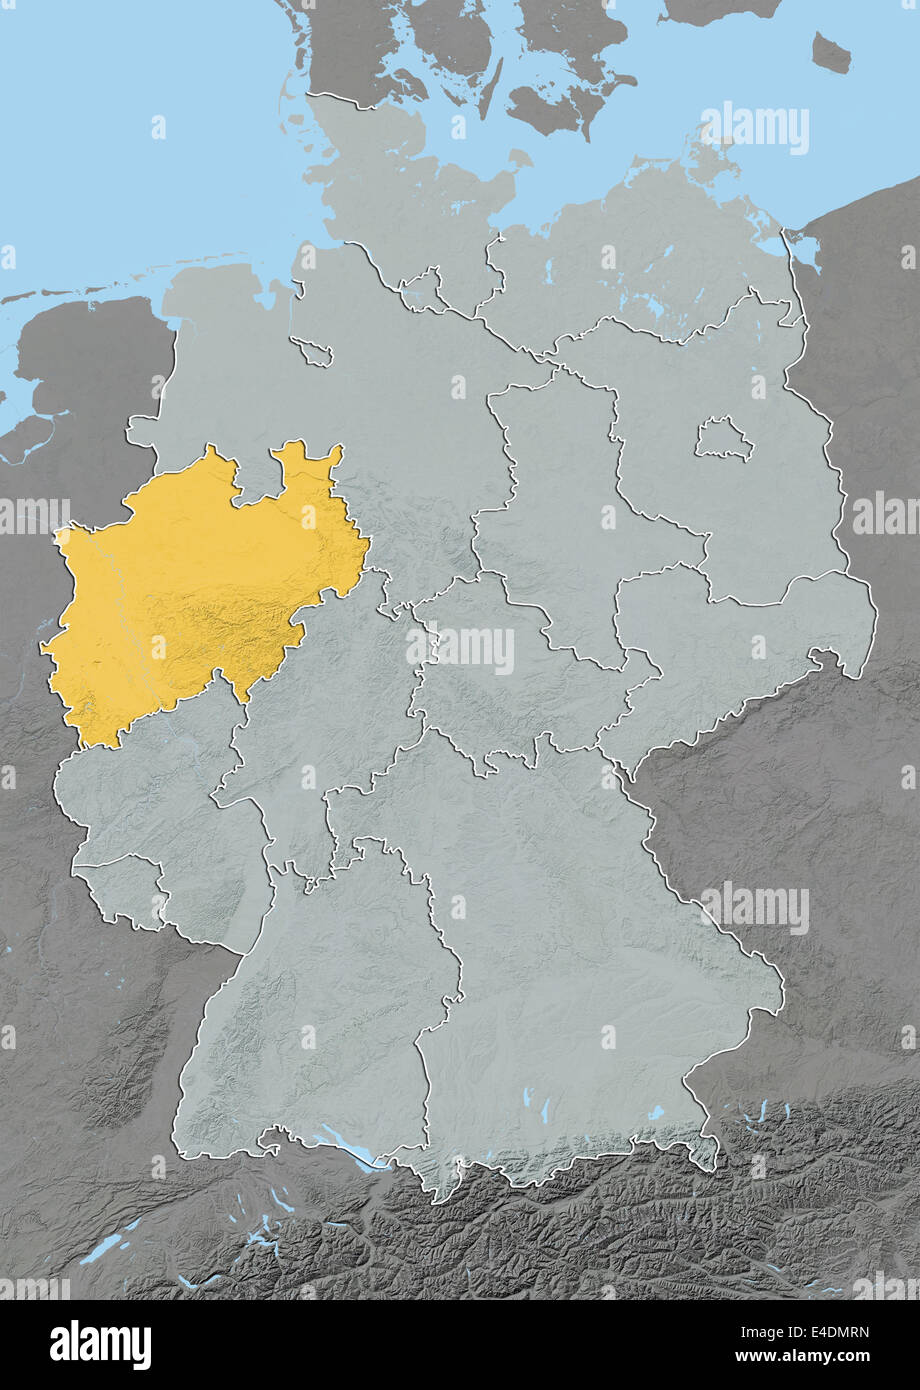 State of North Rhine-Westphalia, Germany, Reliefkarte Stockfoto